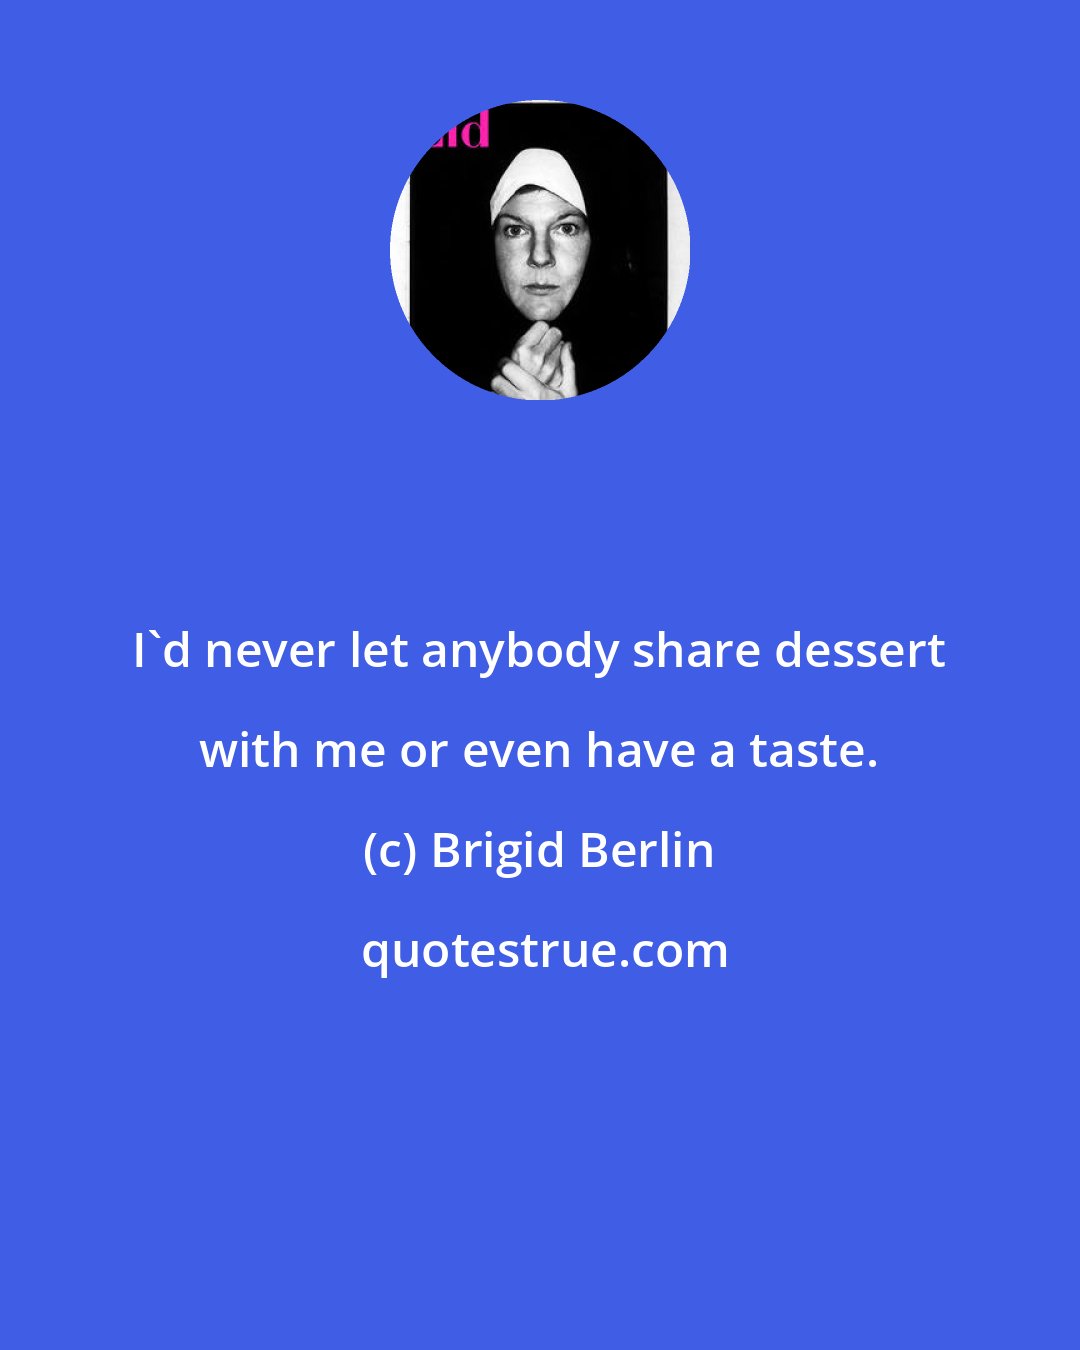 Brigid Berlin: I'd never let anybody share dessert with me or even have a taste.